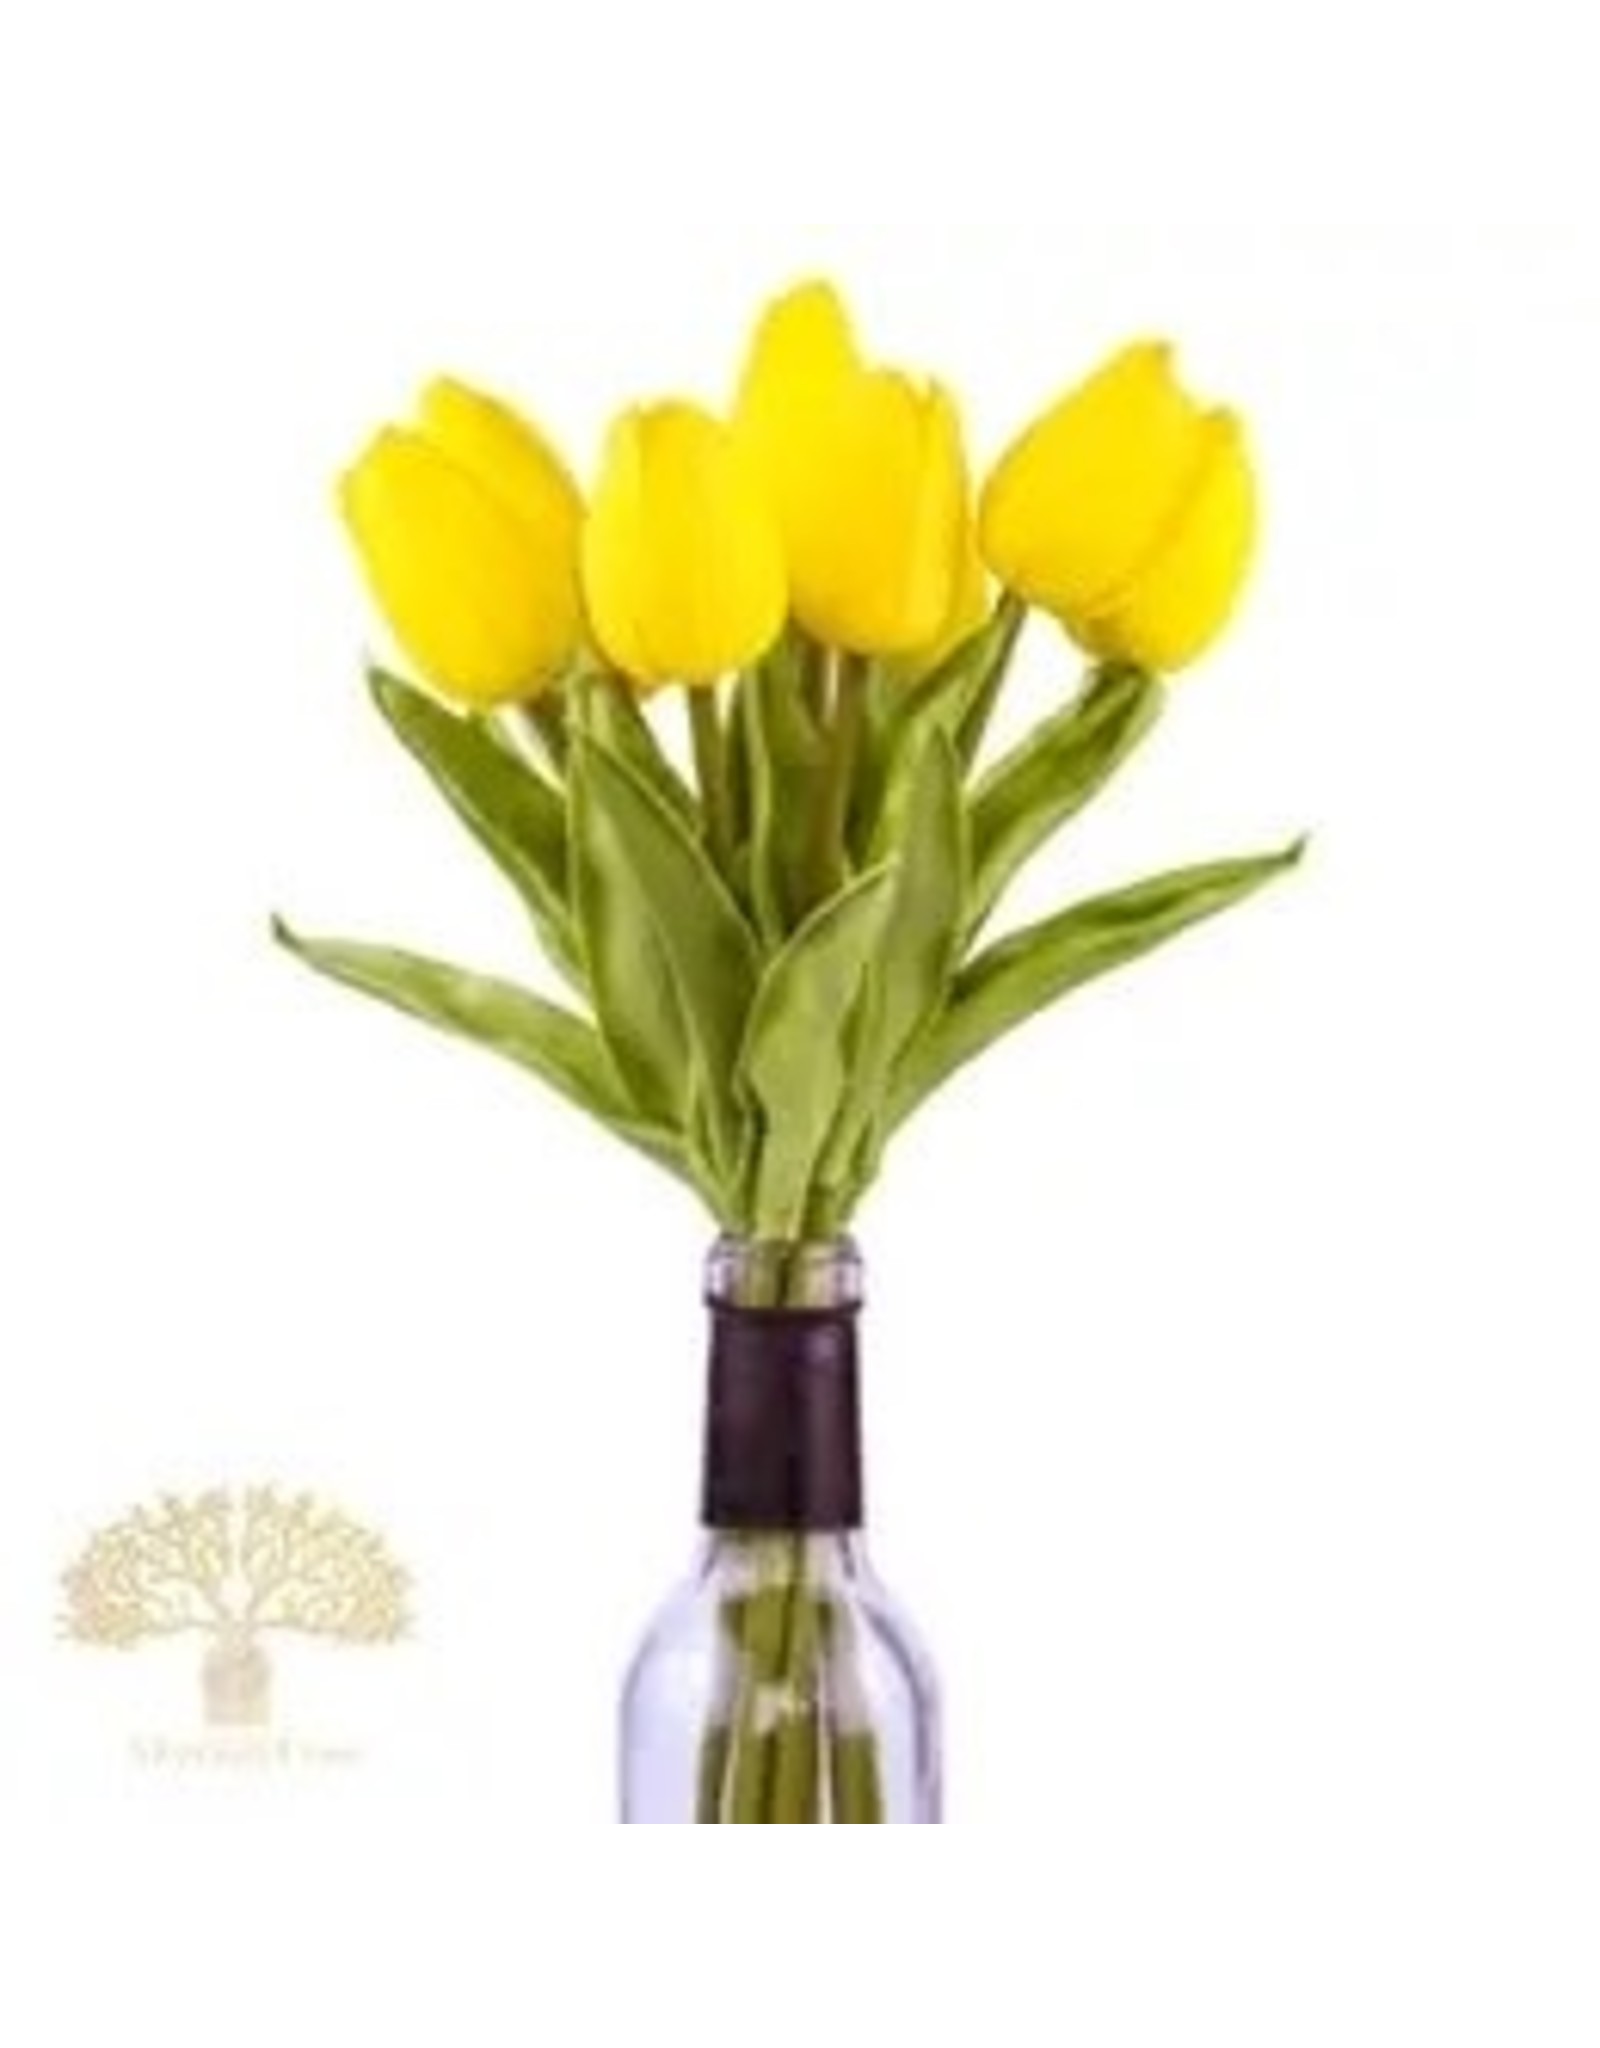 The Florist & The Merchant Tulip - yellow